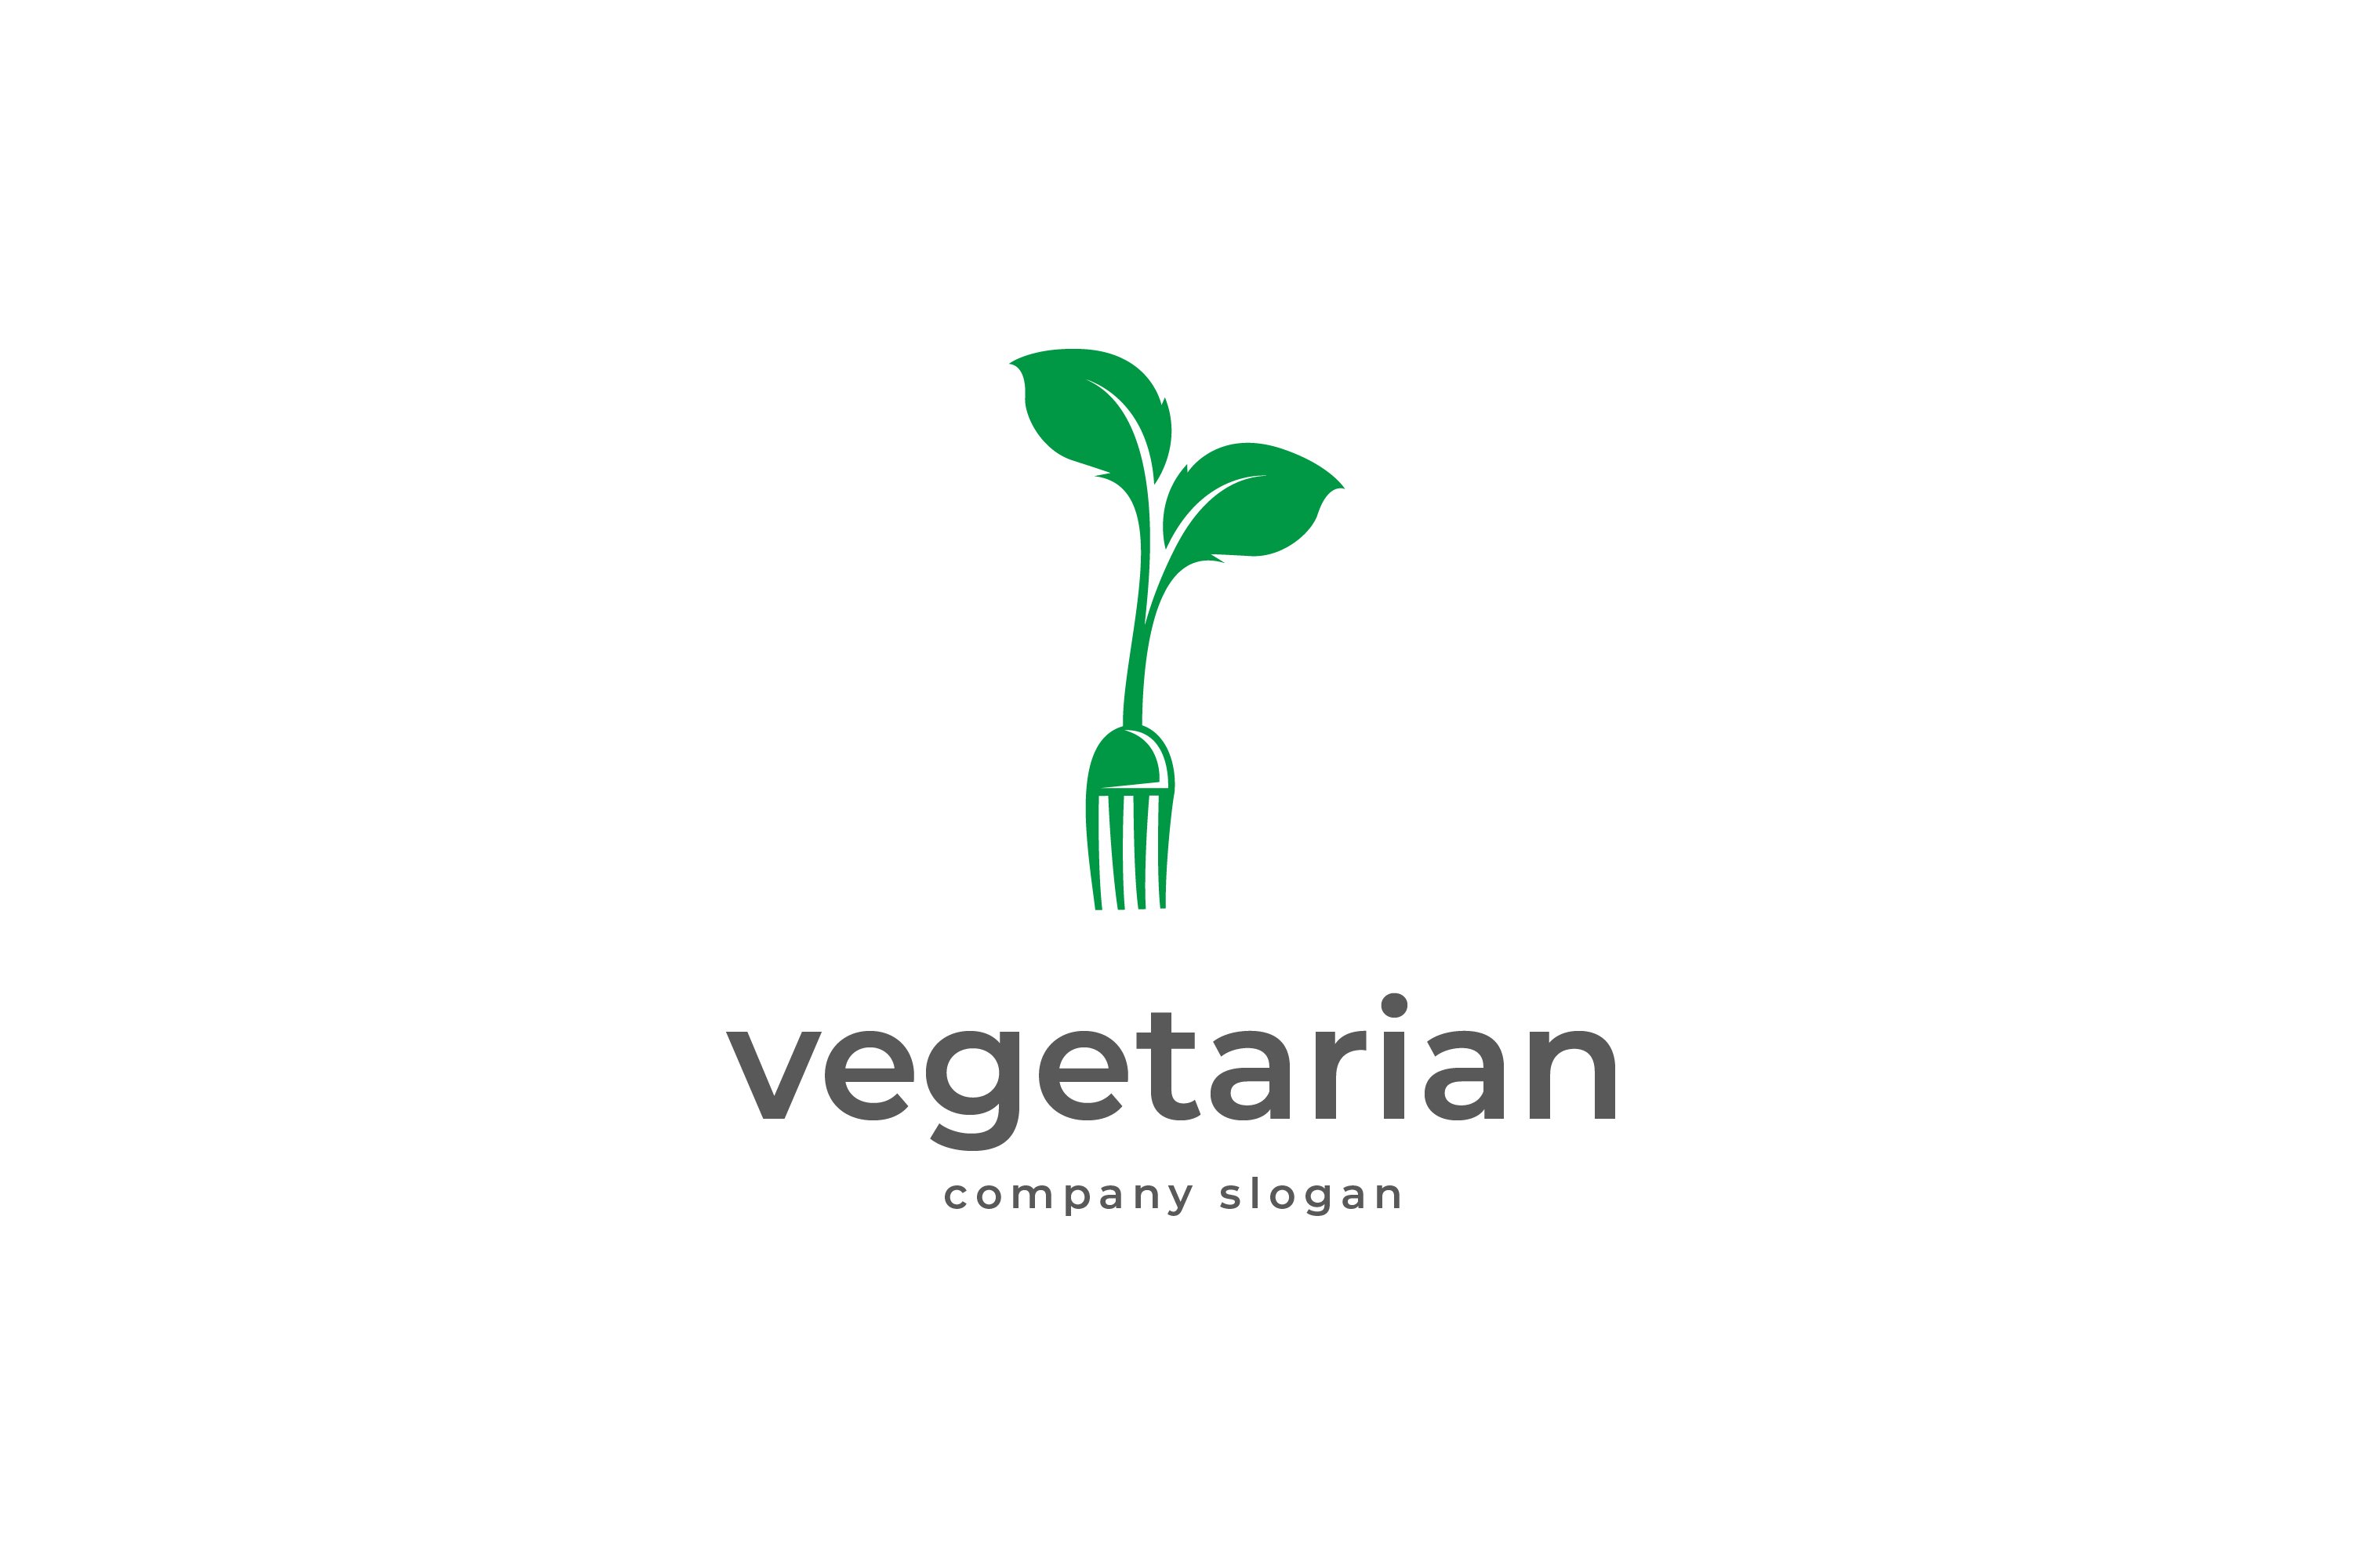 Vegetarian Logo cover image.